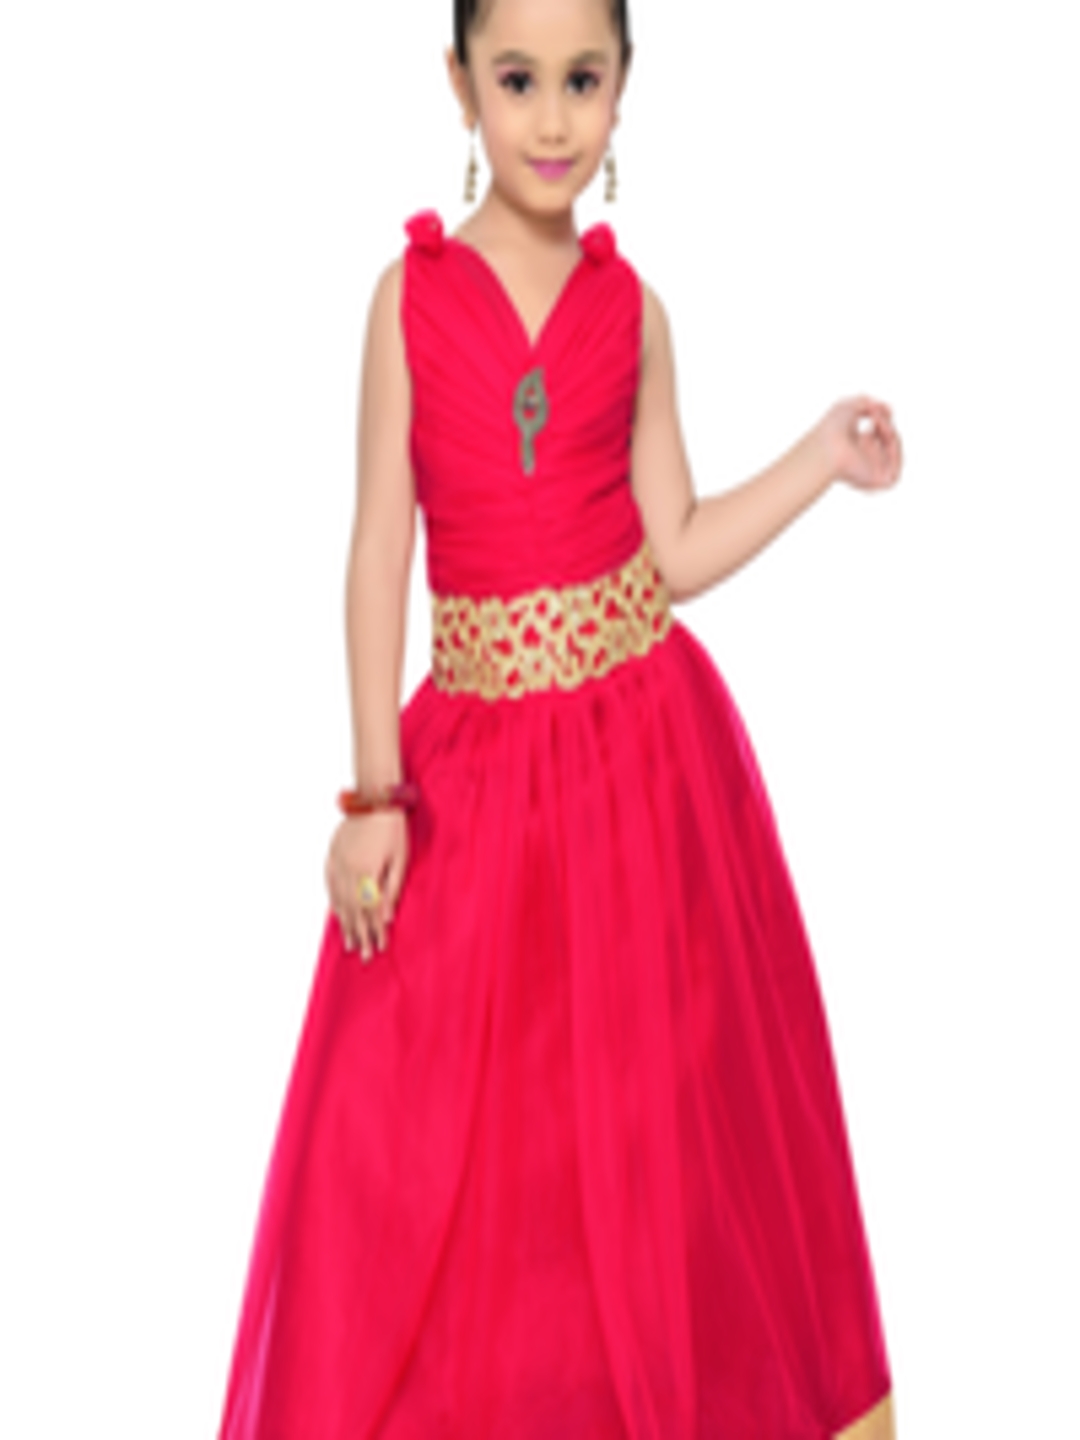 Buy ADIVA Girls Pink Embellished Fit And Flare Dress - Dresses for ...